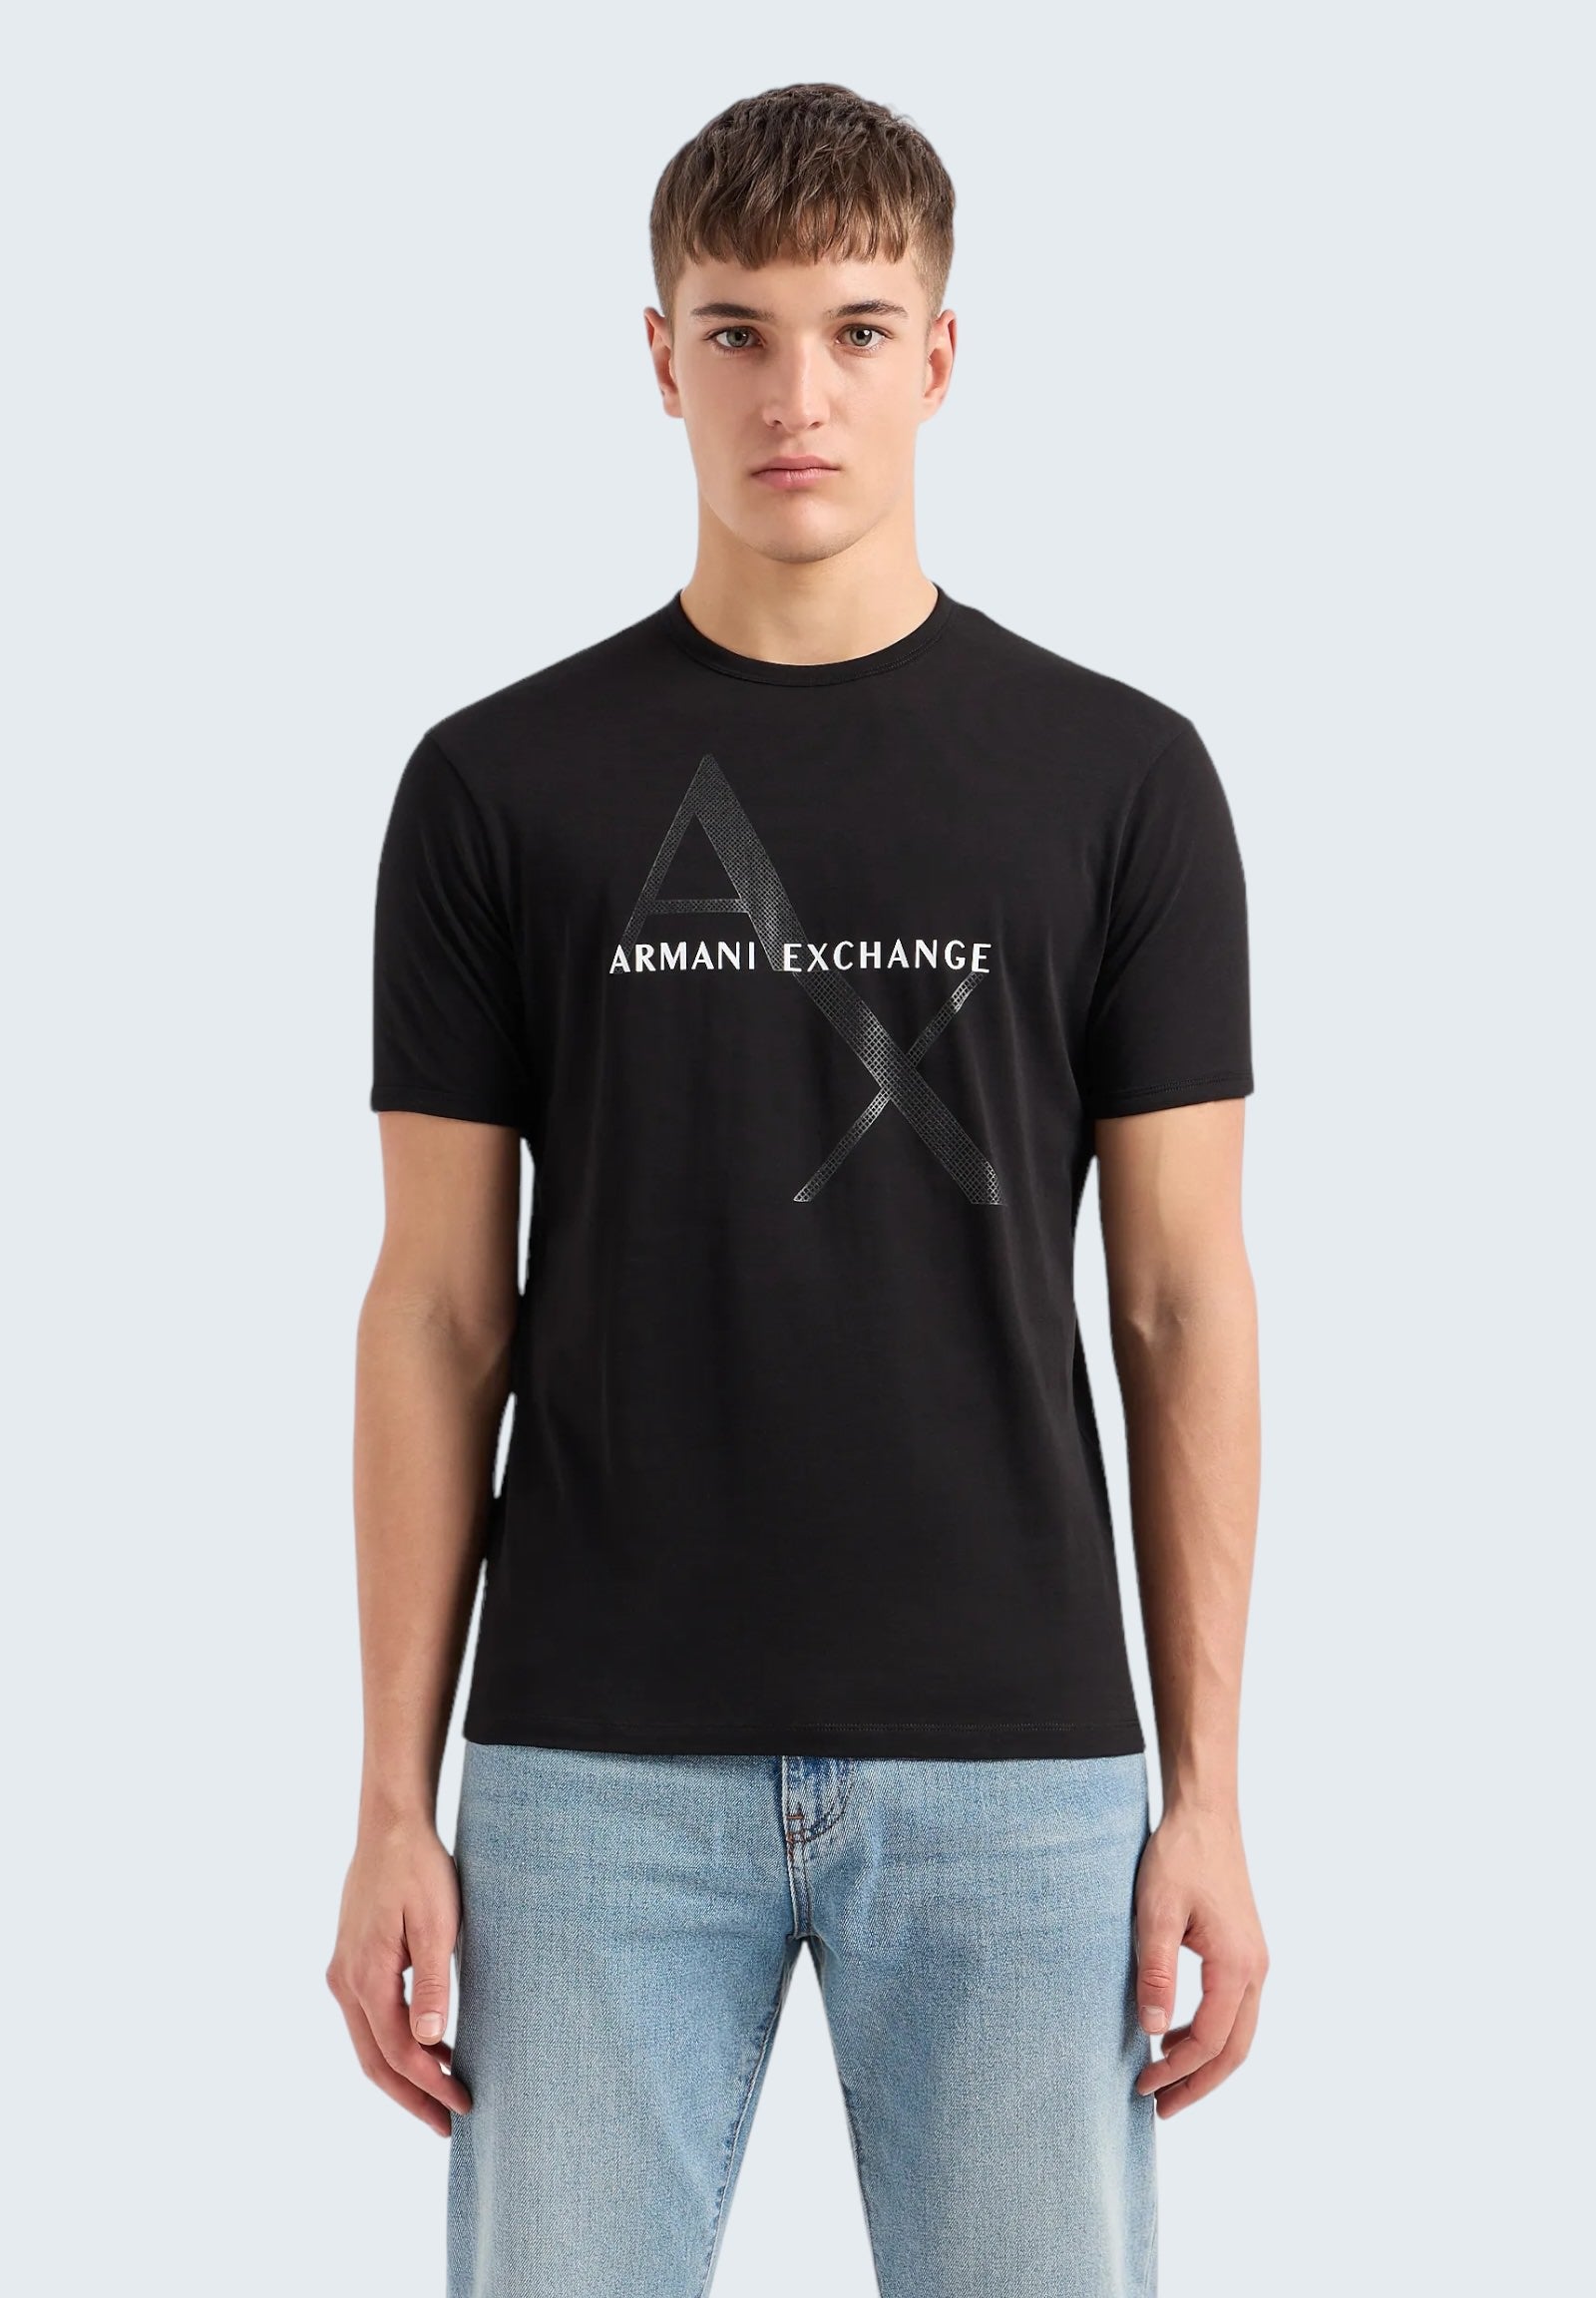 Armani Exchange T-Shirt* 8nzt76 Black